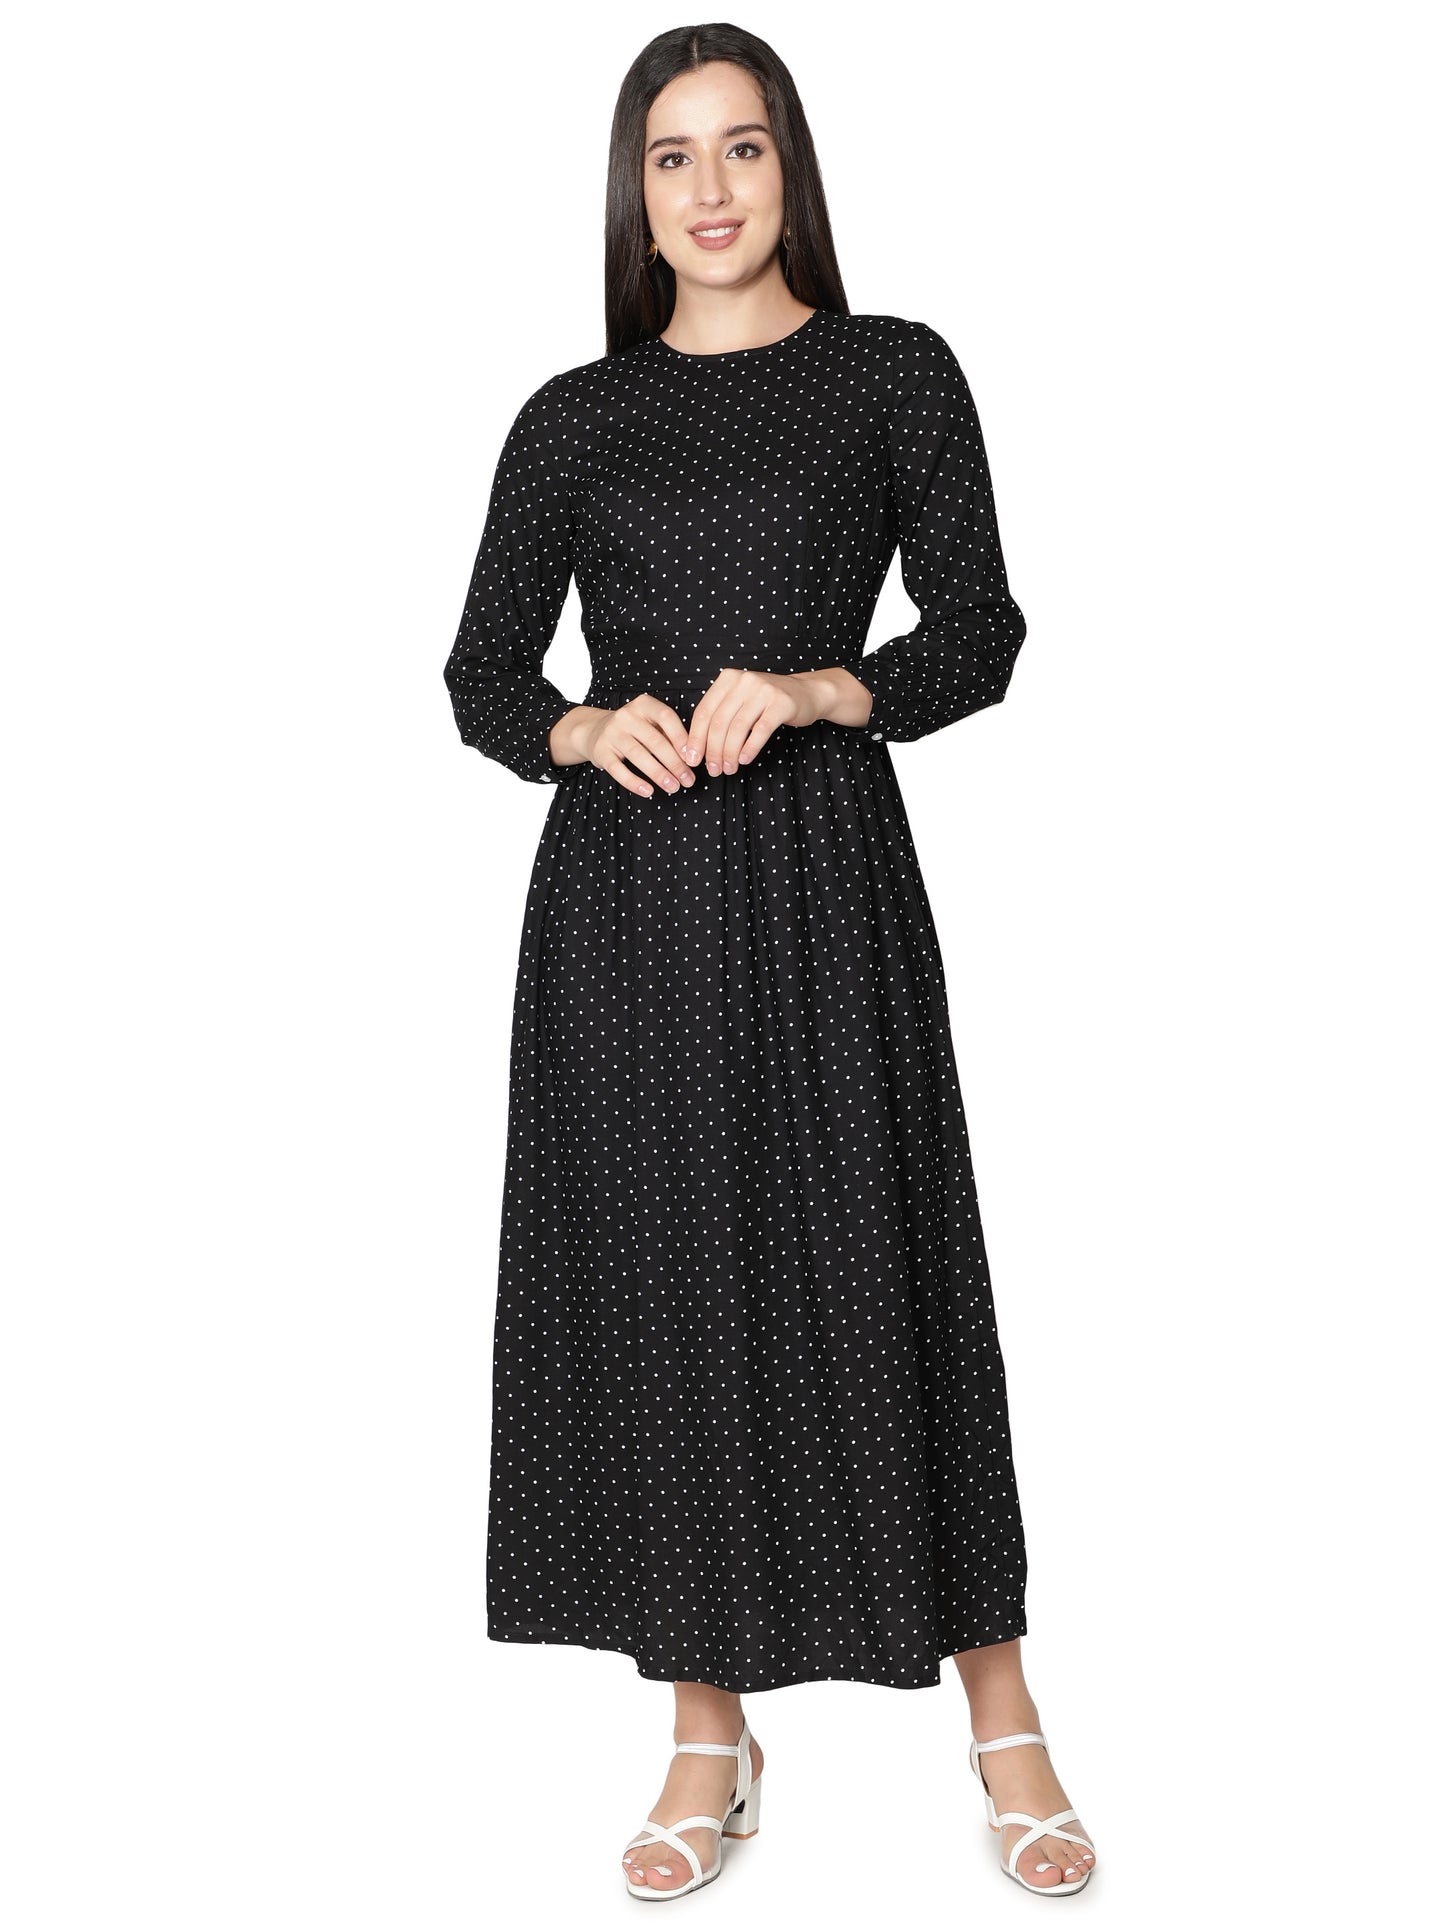 NUEVOSDAMAS Women's Rayon Dot Printed Designer Maxi Dress - Effortlessly Stylish Summer Elegance in Black